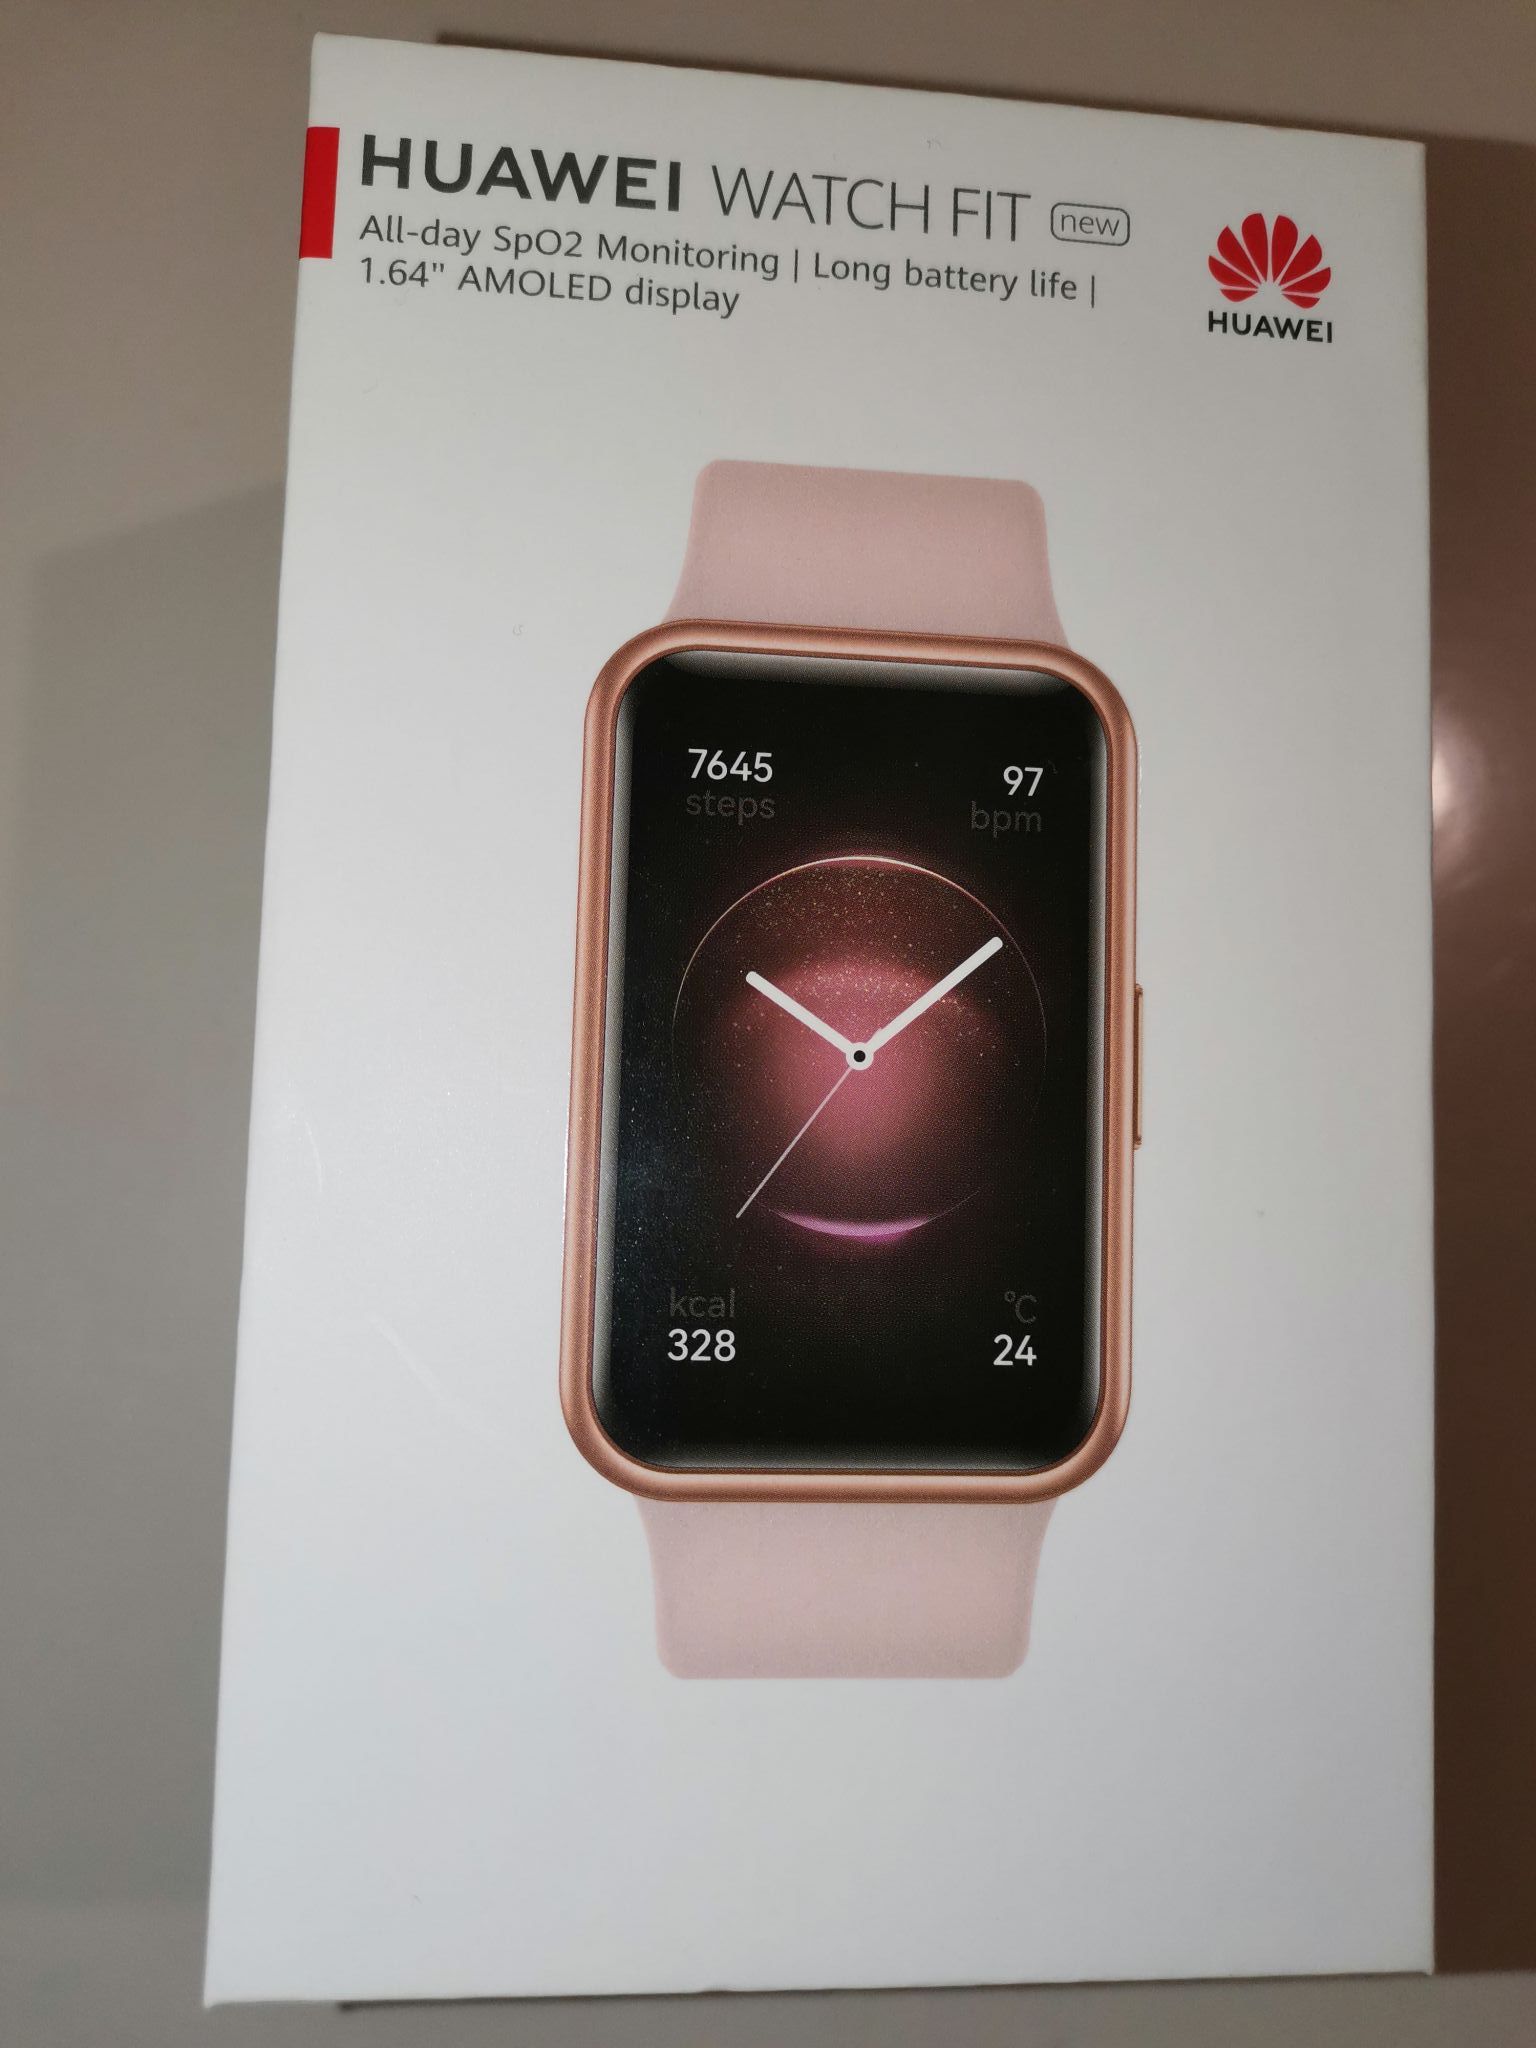 Часы huawei розовые. Смарт-часы Fit 2 Sakura Pink Silicone Strap, yda-b09s золотистый/розовый. Huawei watch Fit New. Смарт-часы Huawei watch Fit New Sakura Pink (Tia-b09). Watch Fit 2 Active Edition розовый.